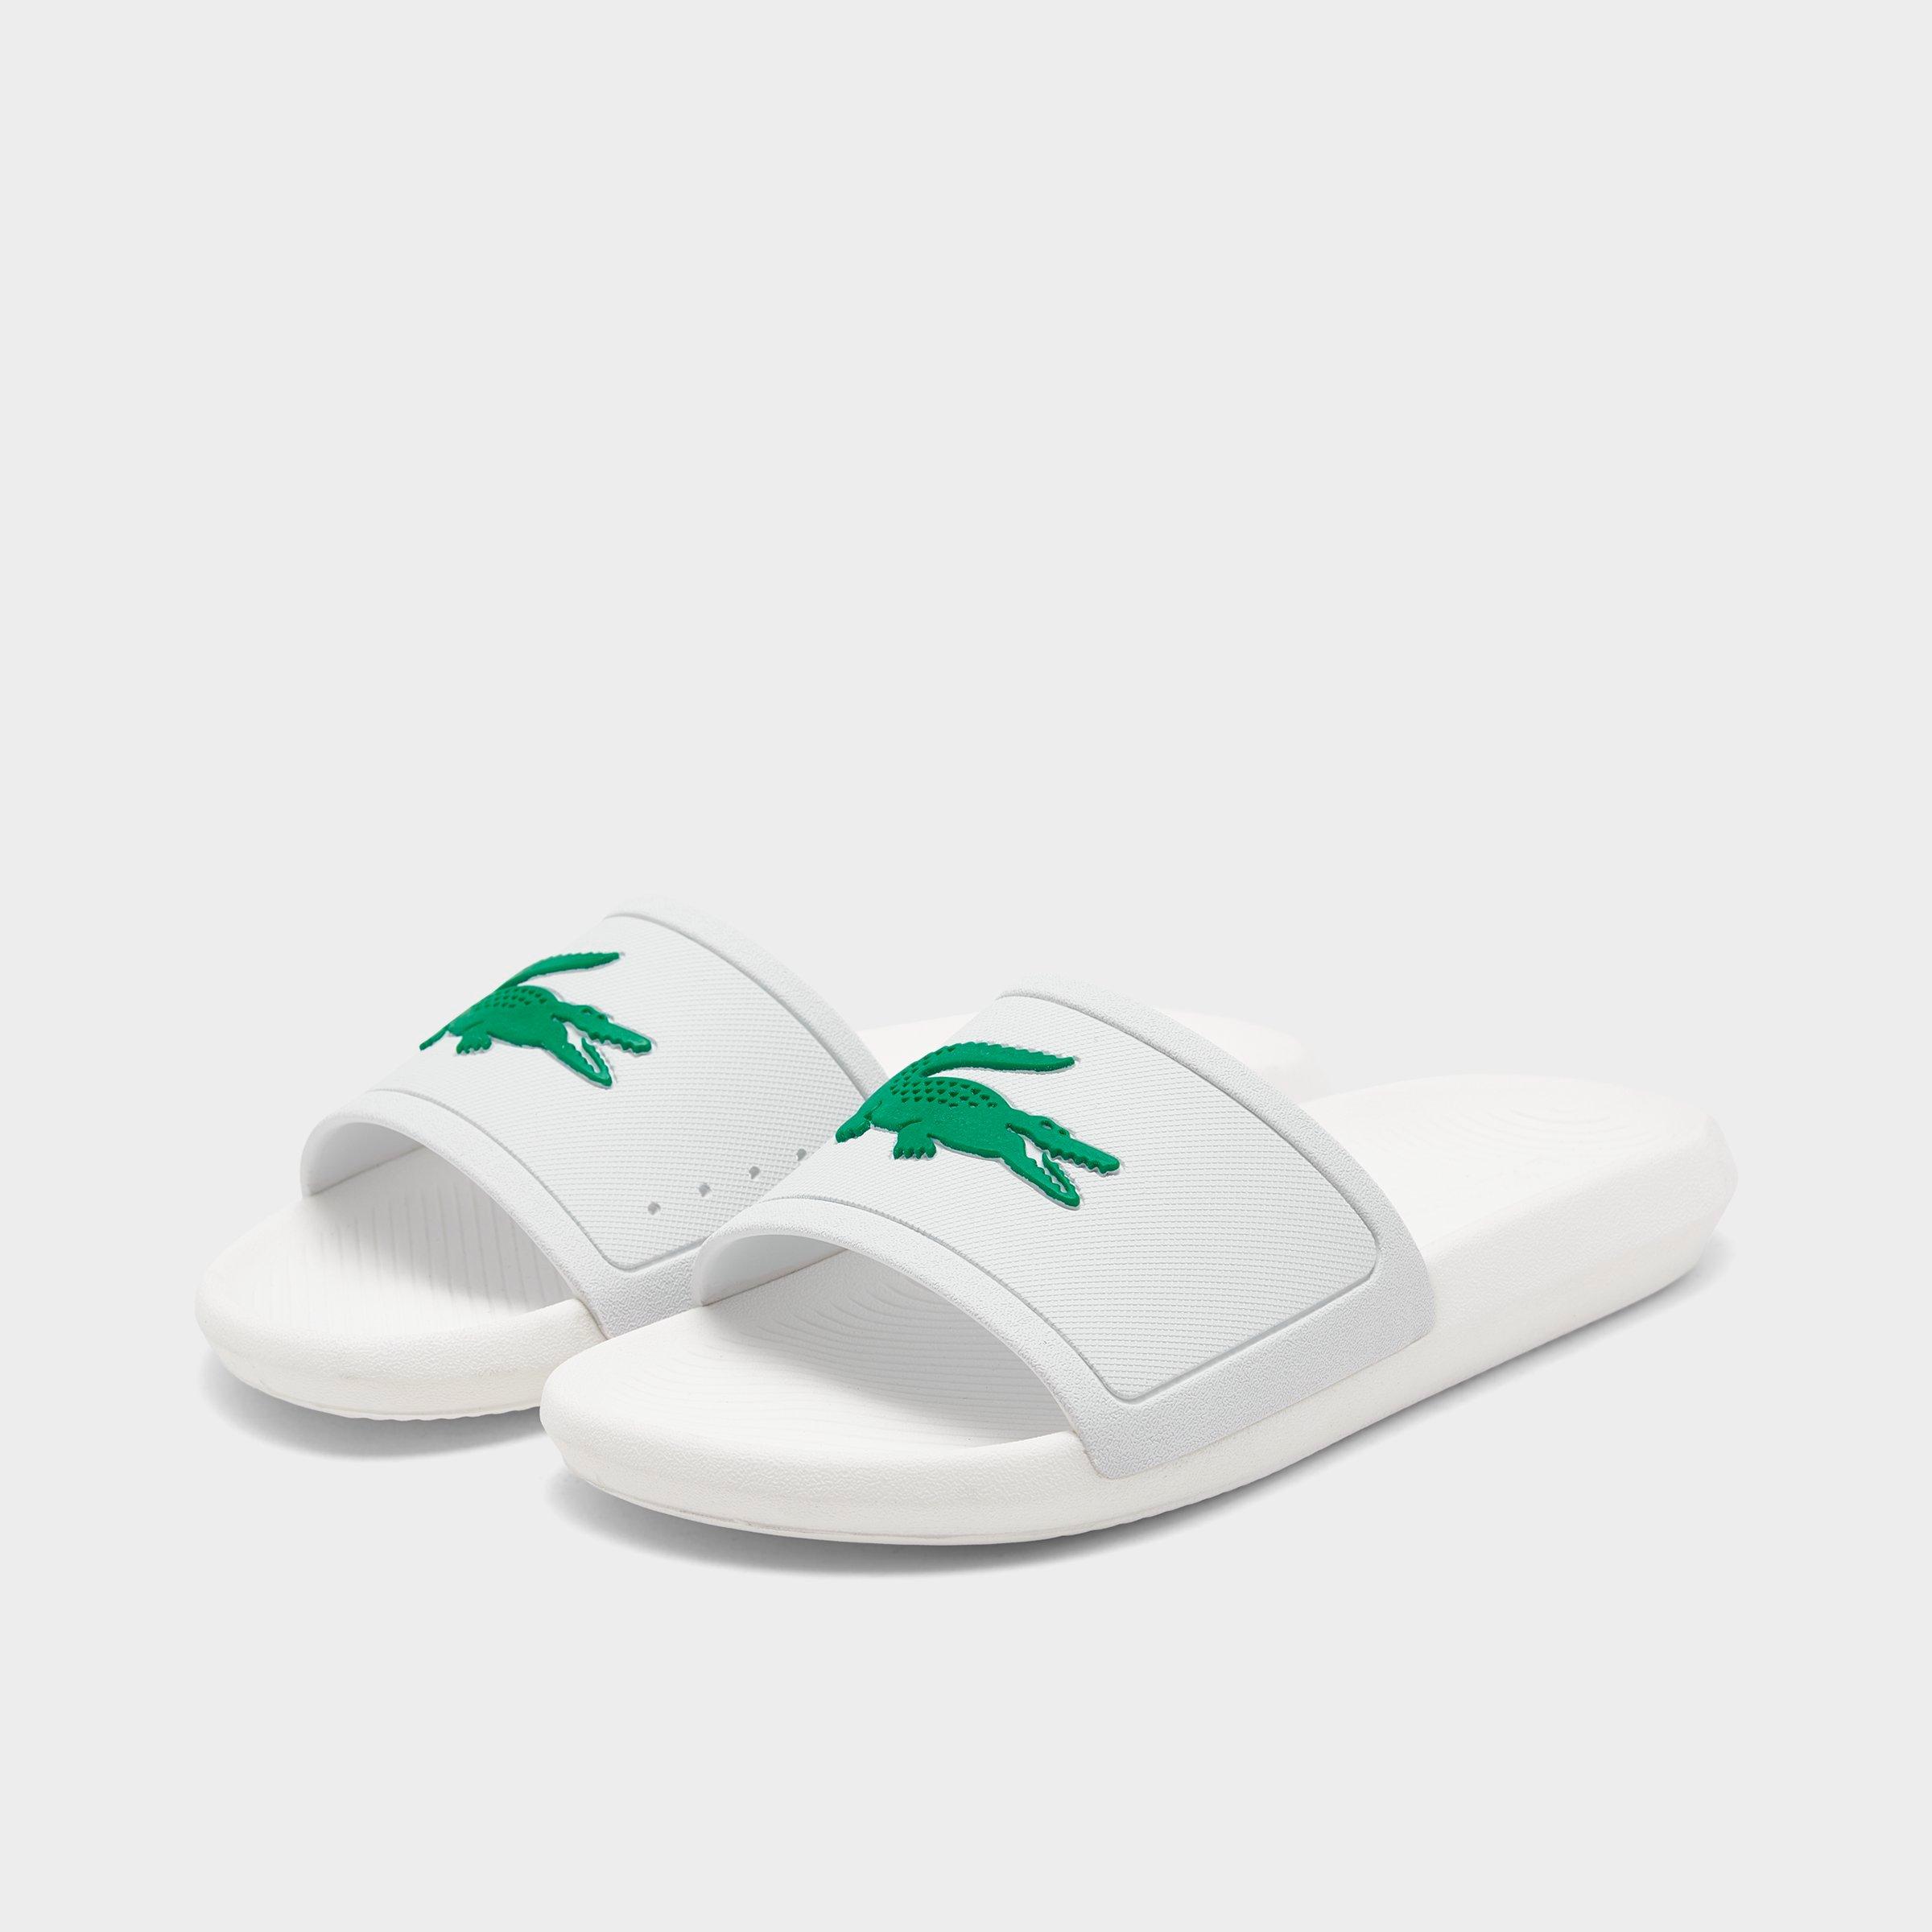 men's lacoste croco 119 slide sandals